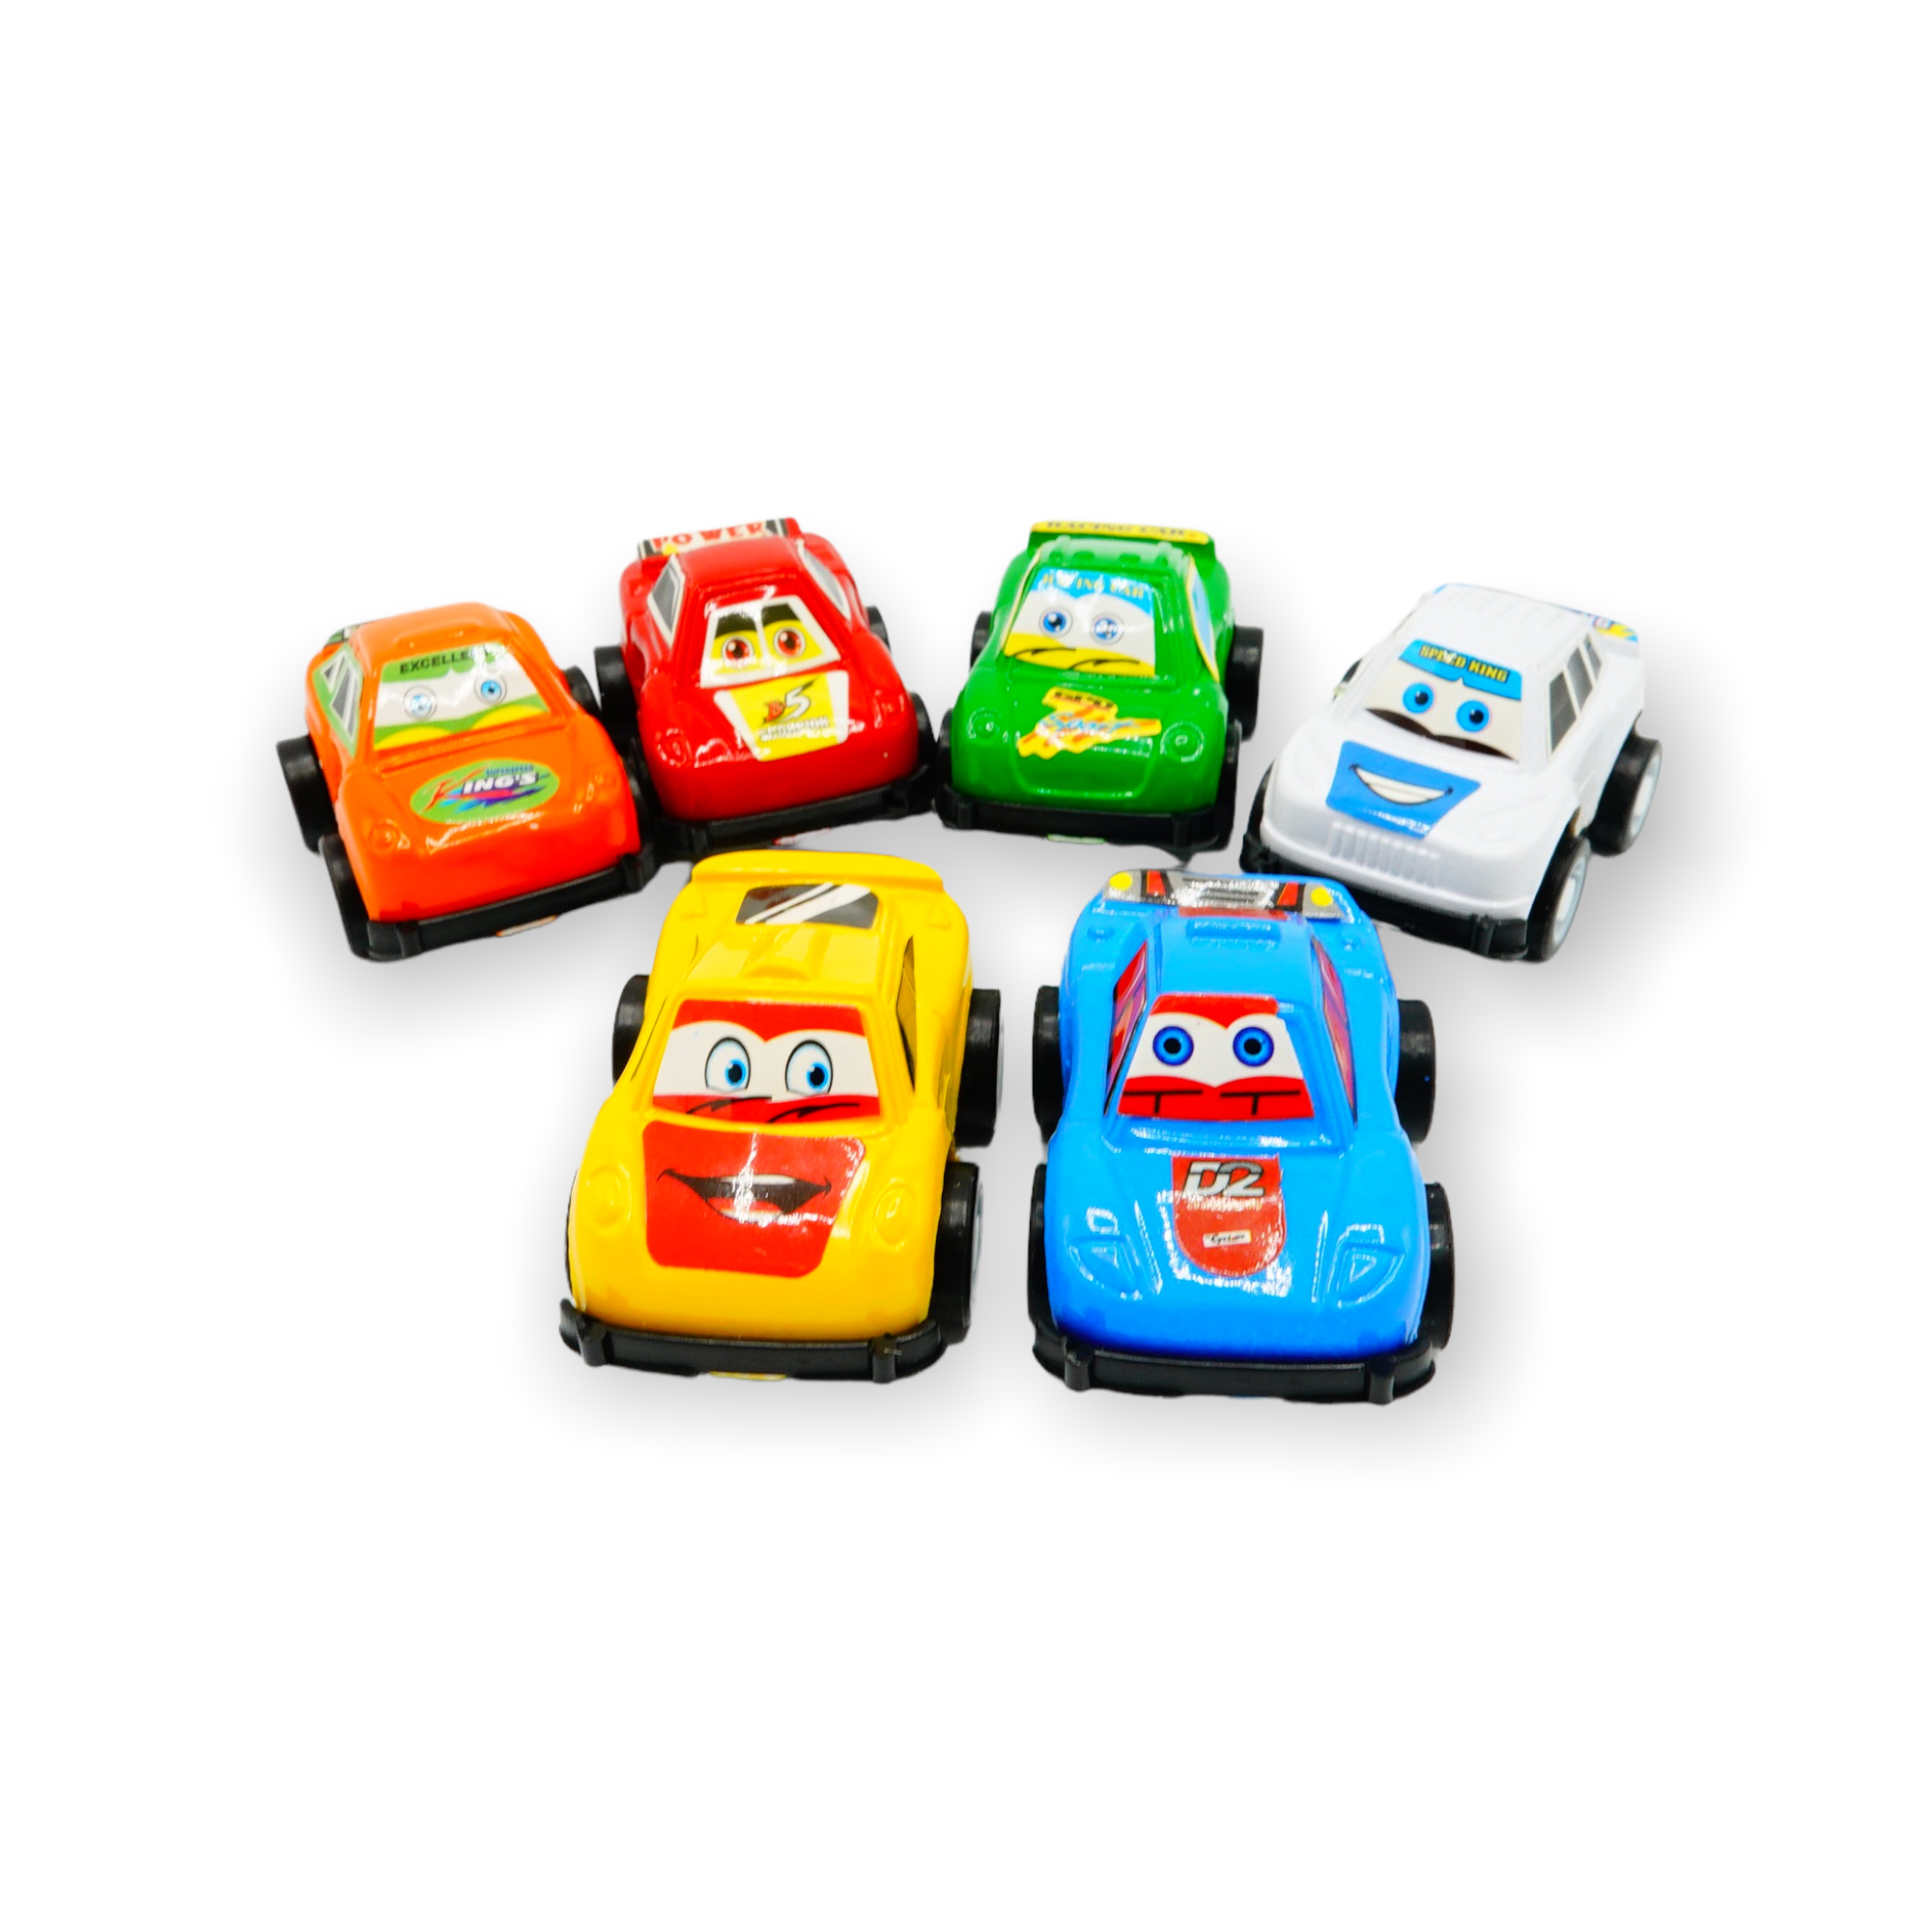 Mini Cartoon auto met pullback motor 5cm 6 kleuren 60 stuks